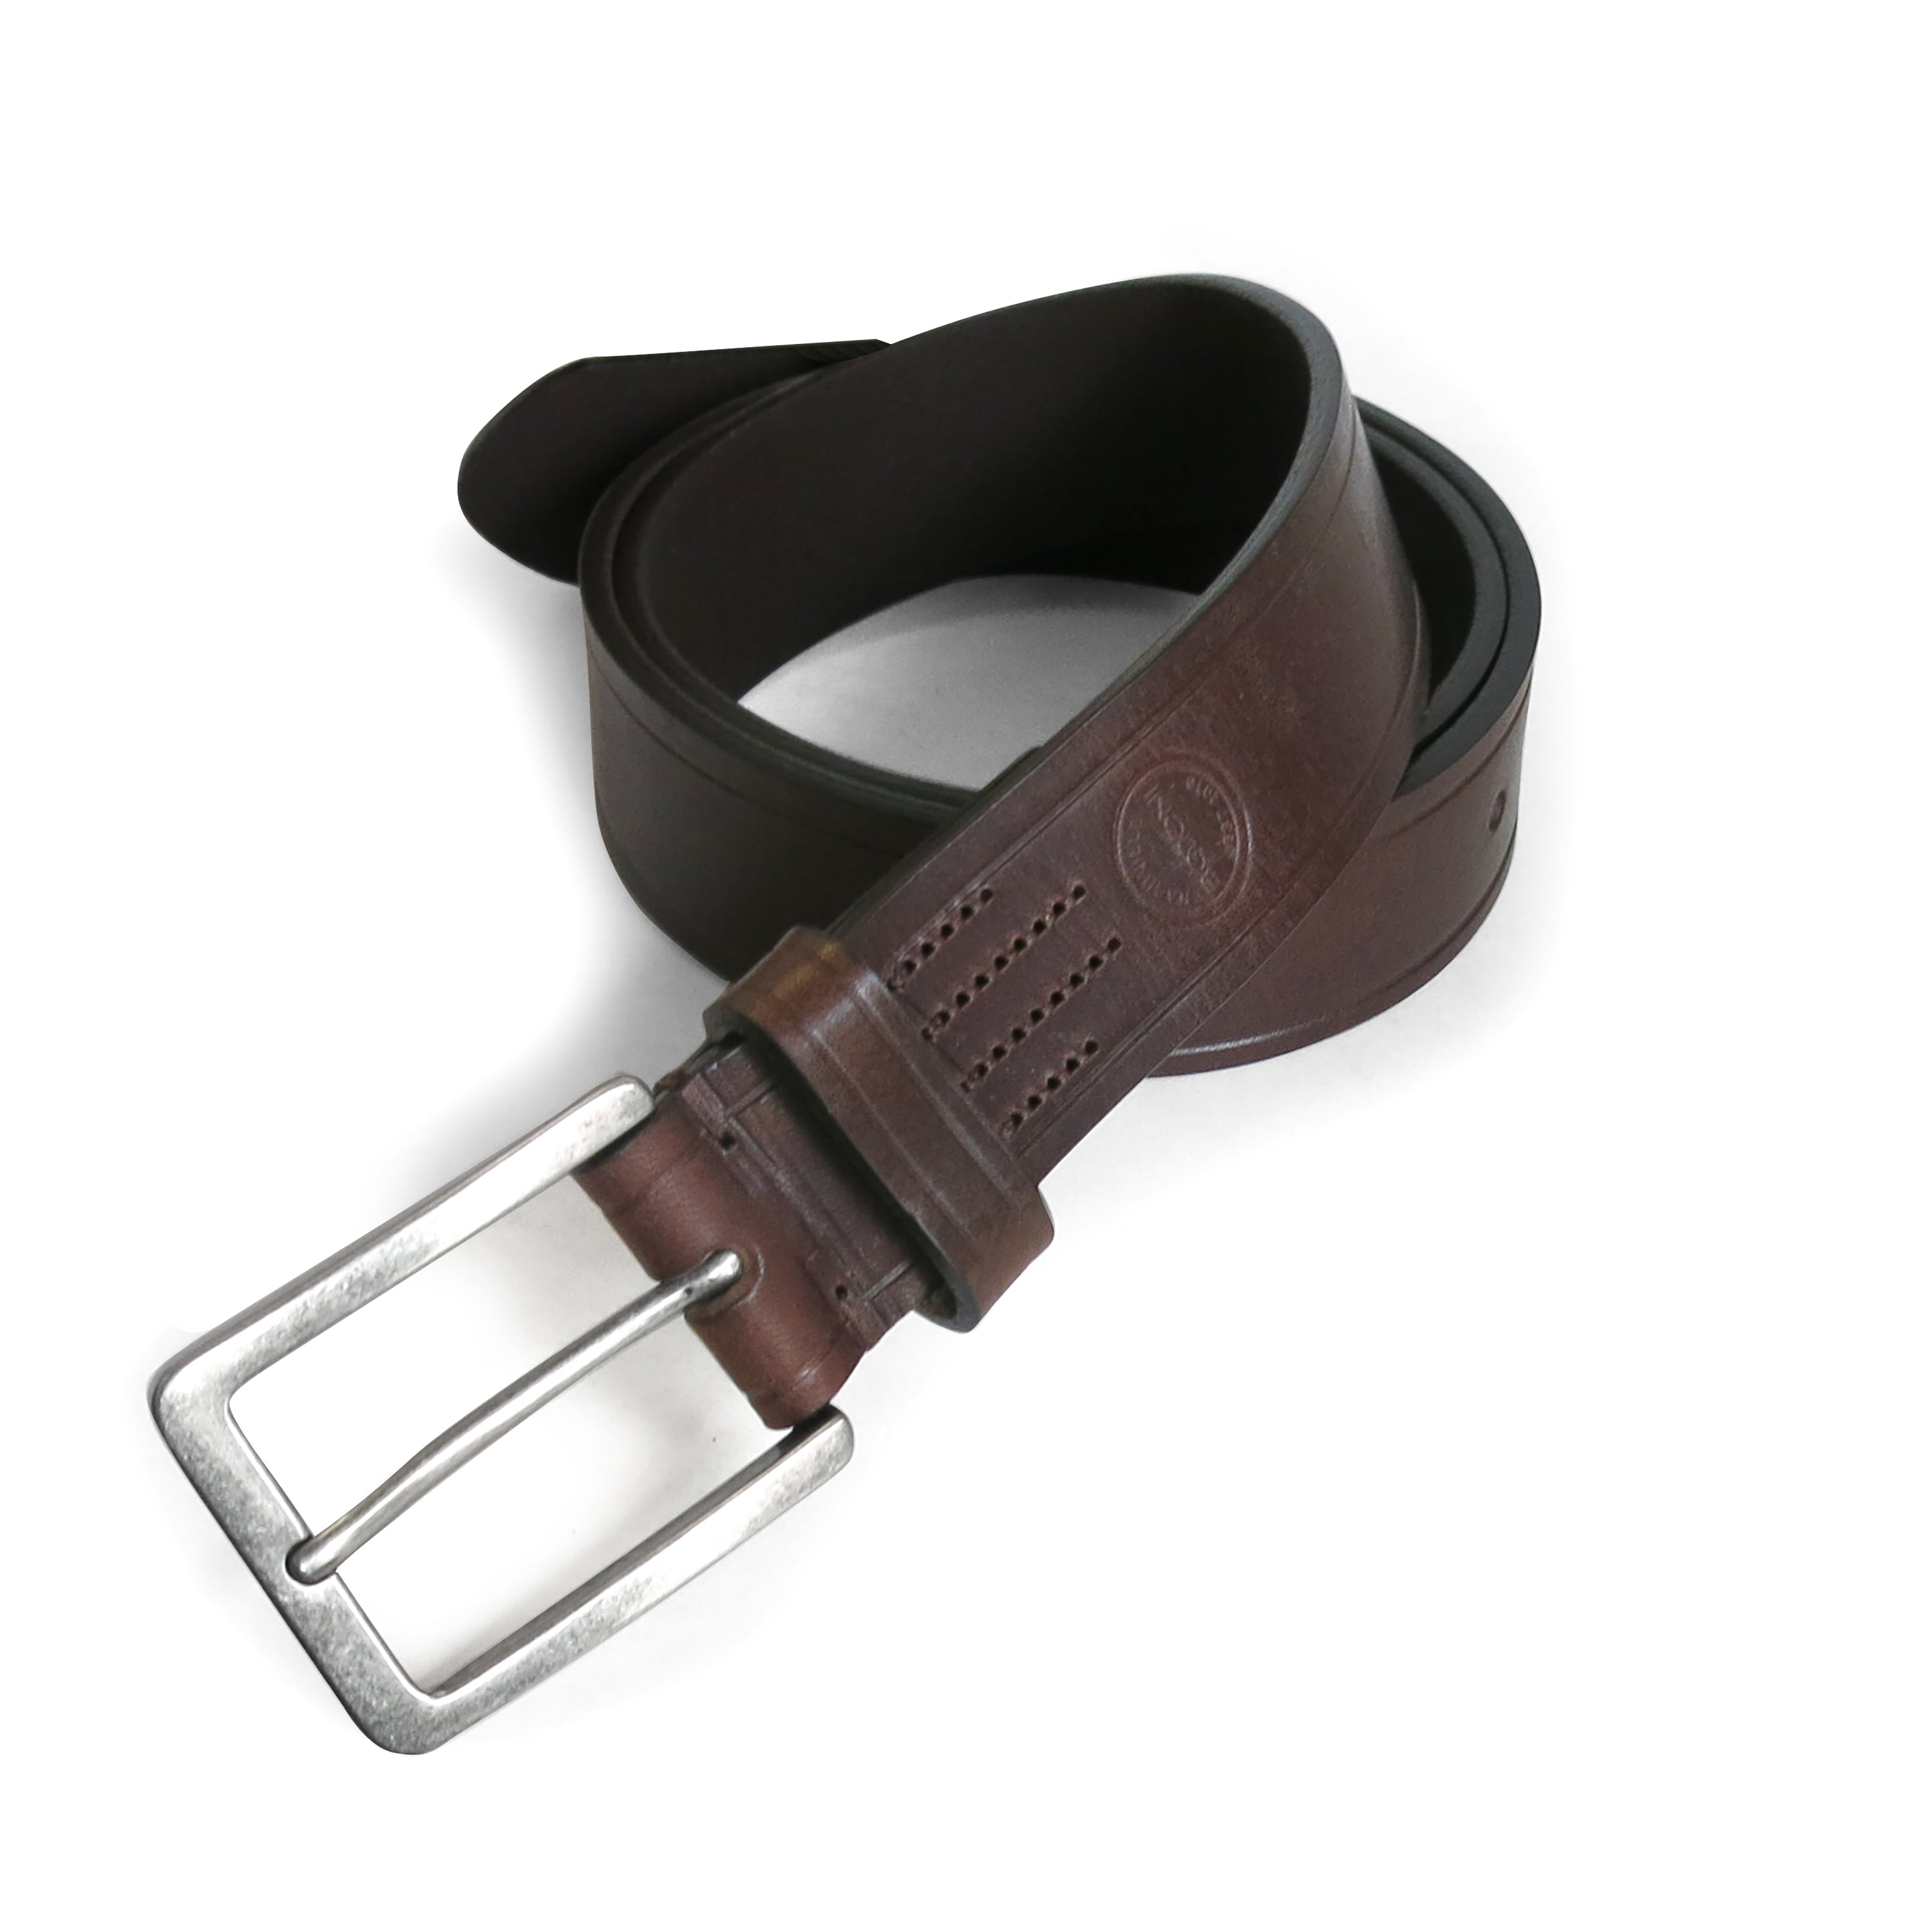 Buy CIMONI Classic Executive Men's Leather Belt